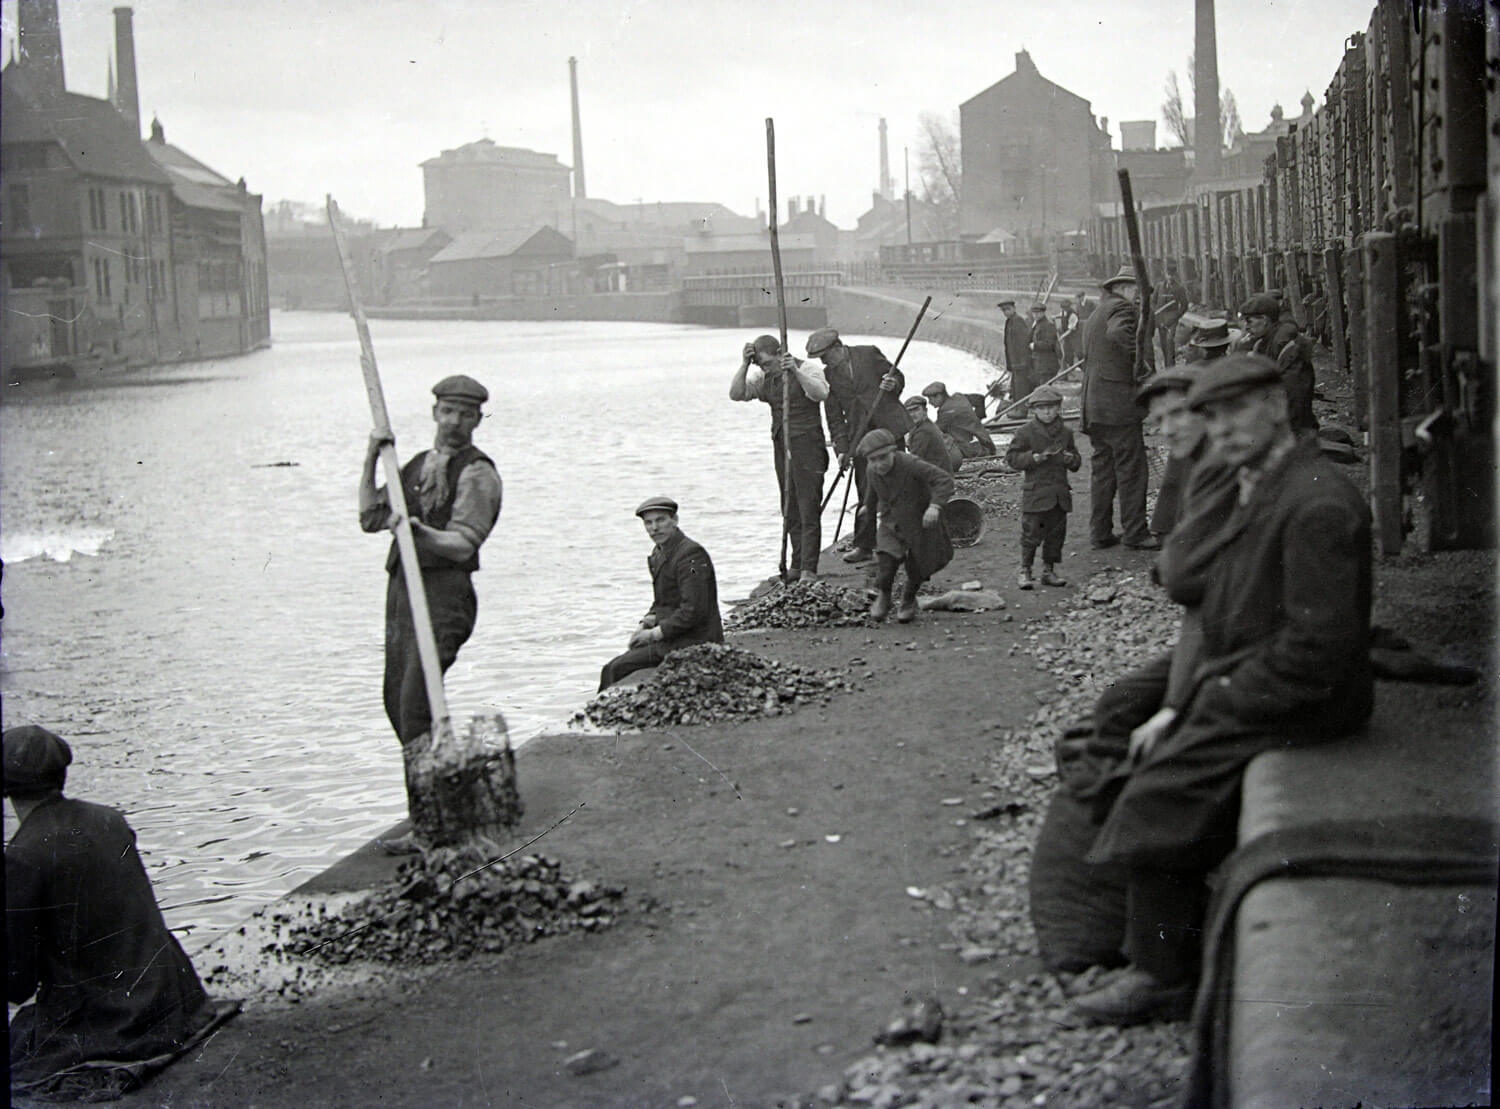 Fishing for coal off West Bridge sidings